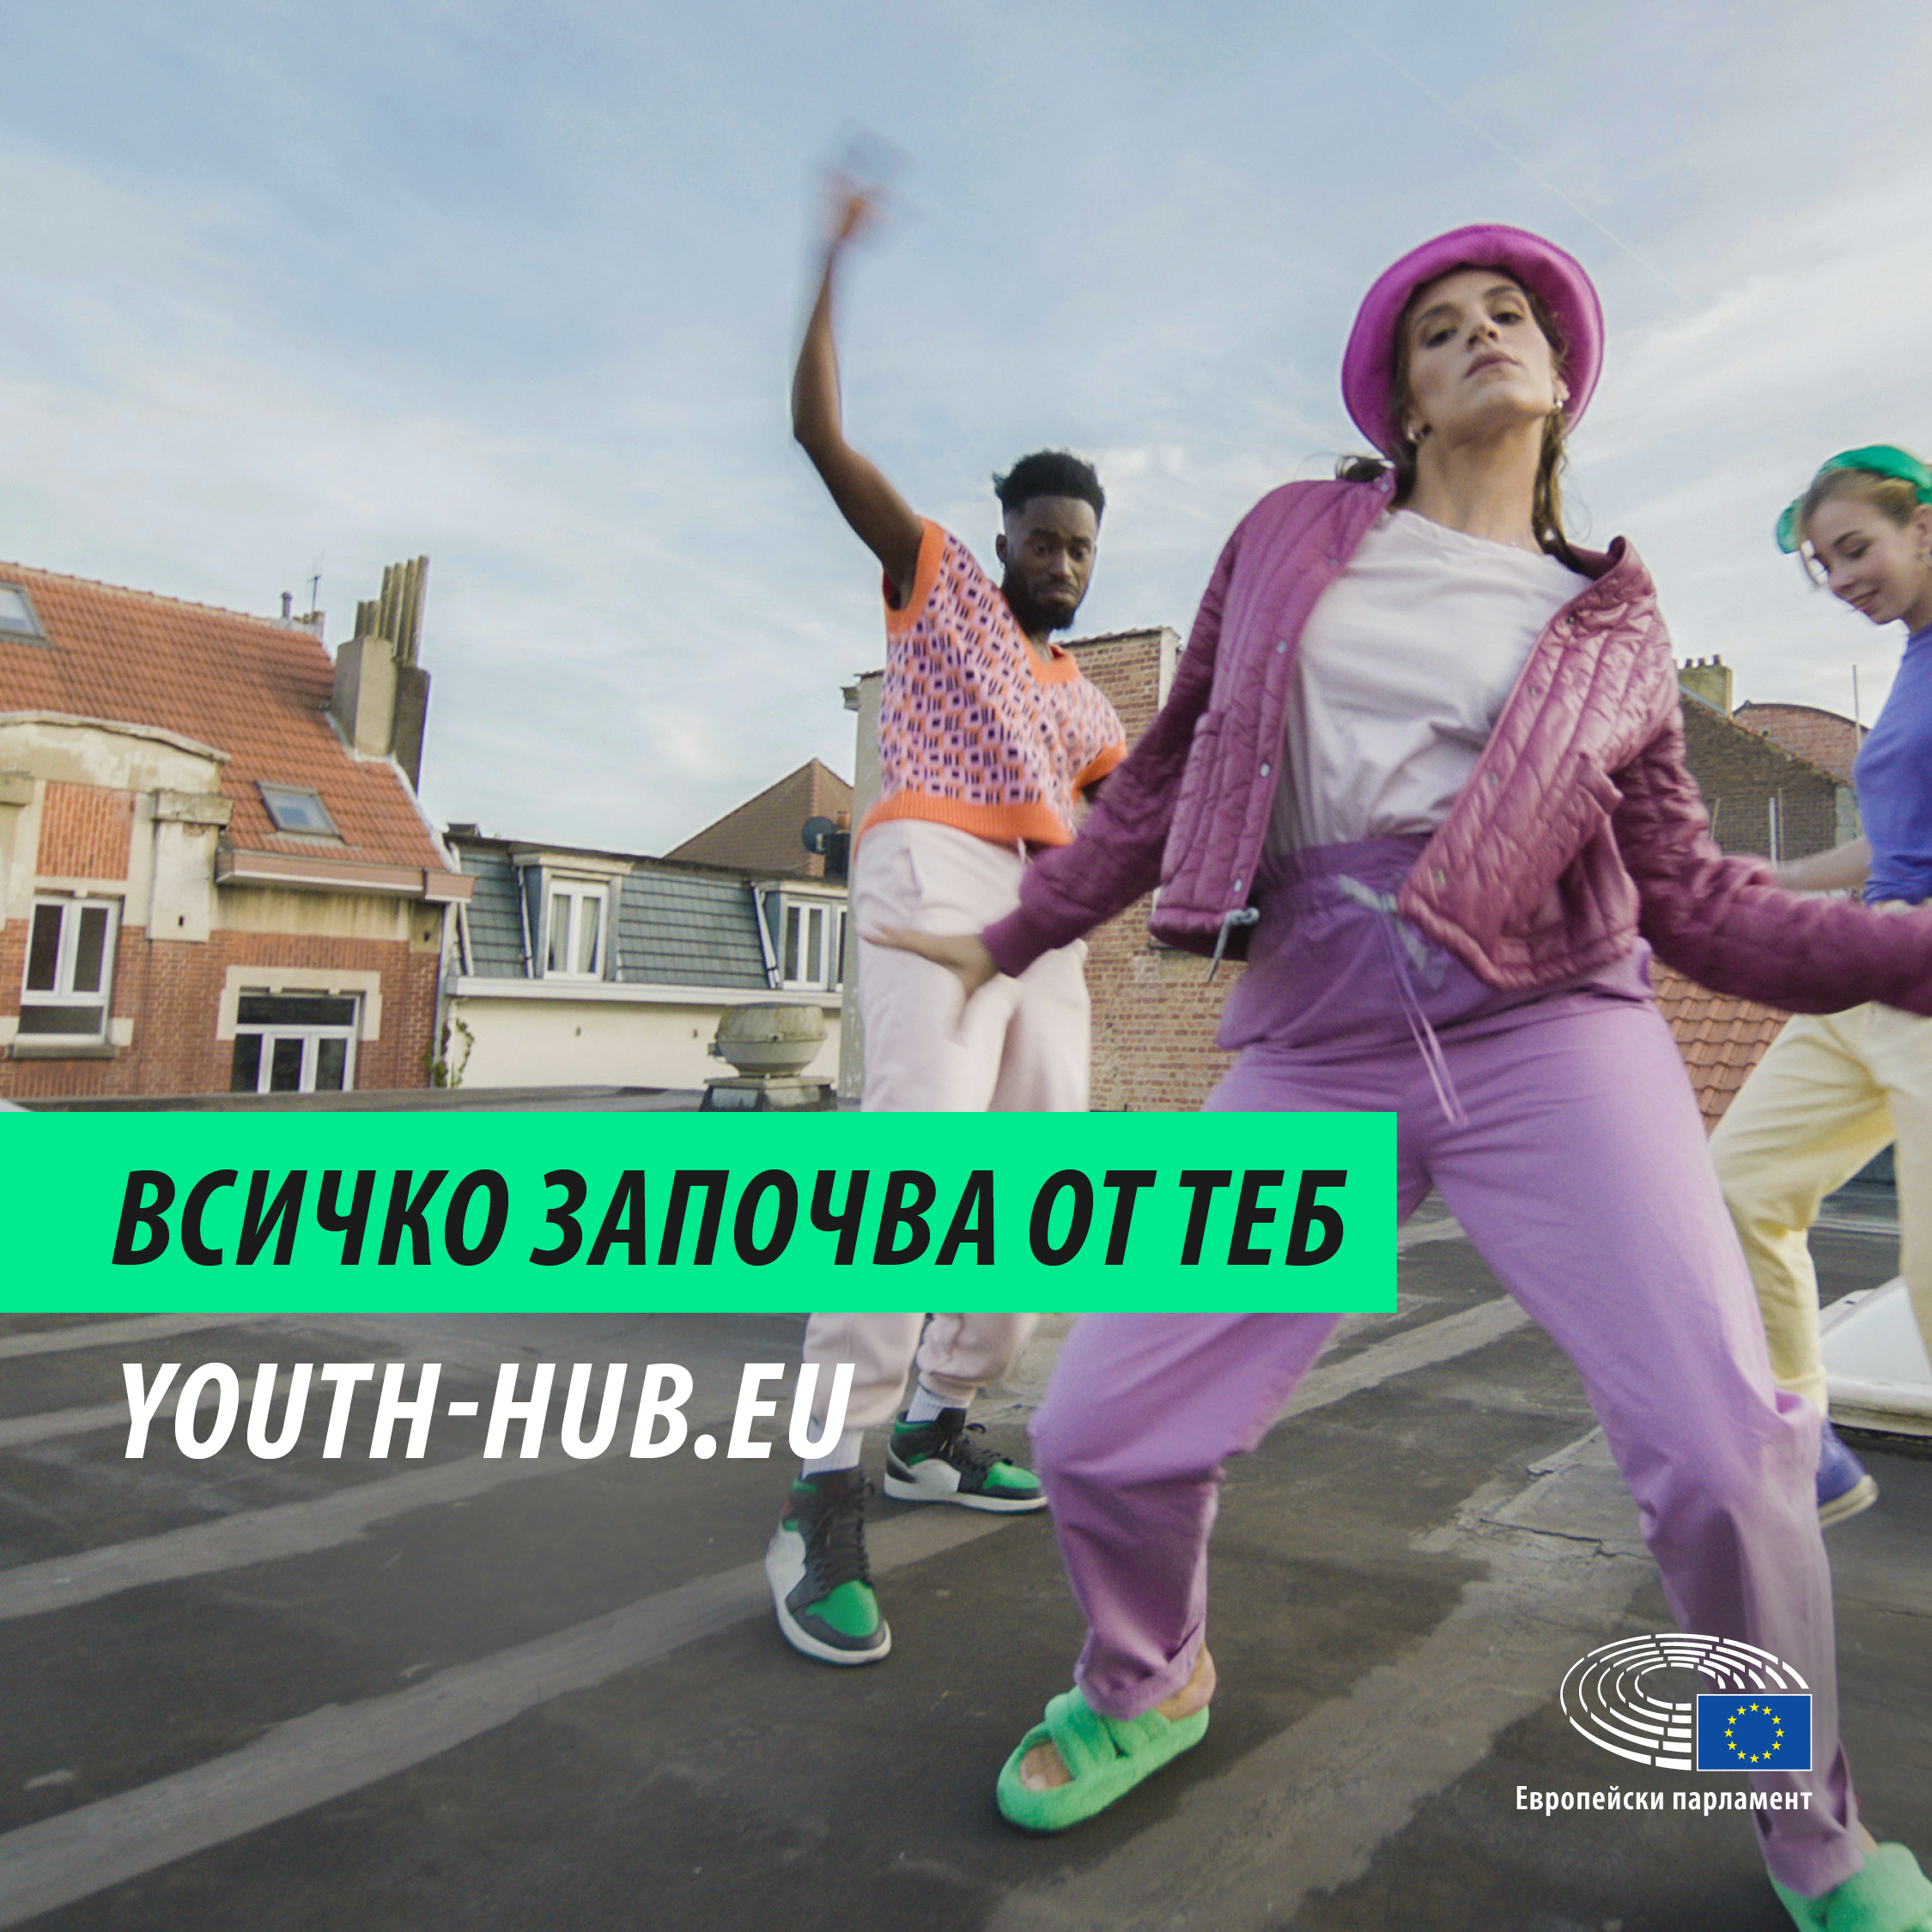 Youth Hub promotional pic 1080x1080 BG